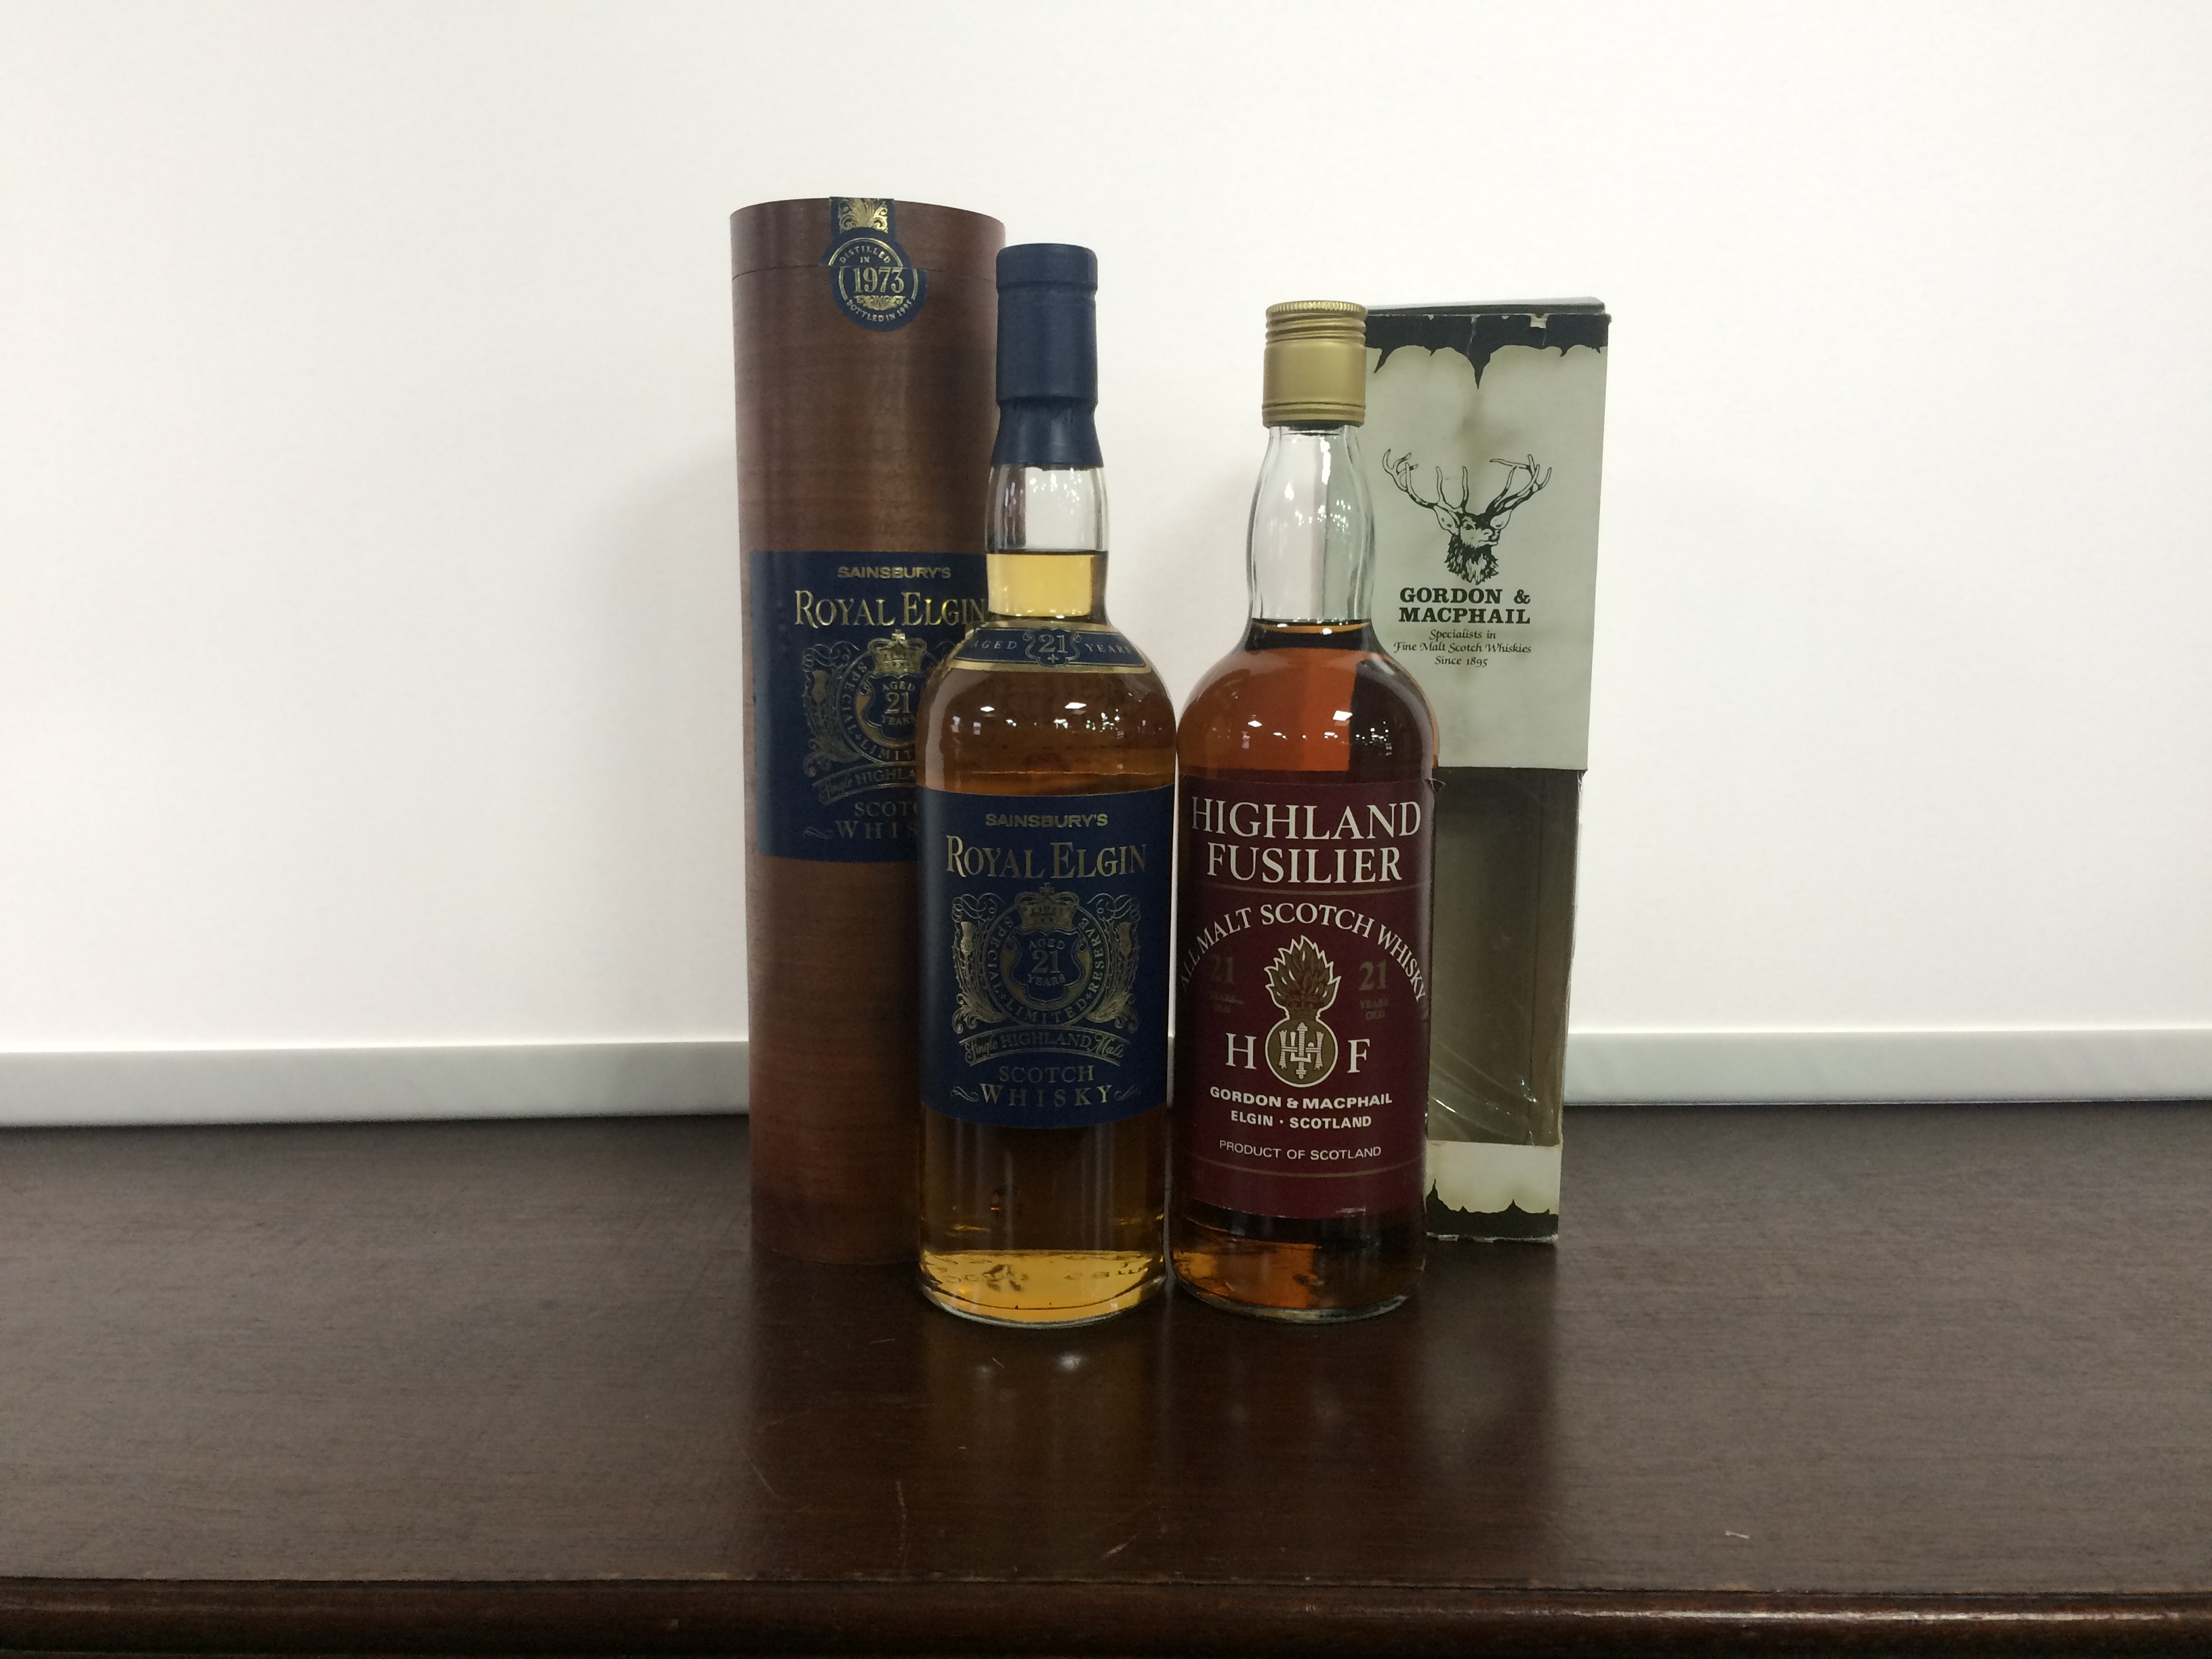 ROYAL ELGIN 1973 AGED 21 YEARS Single Highland Malt Scotch Whisky Bottled in 1995 for Sainsbury's